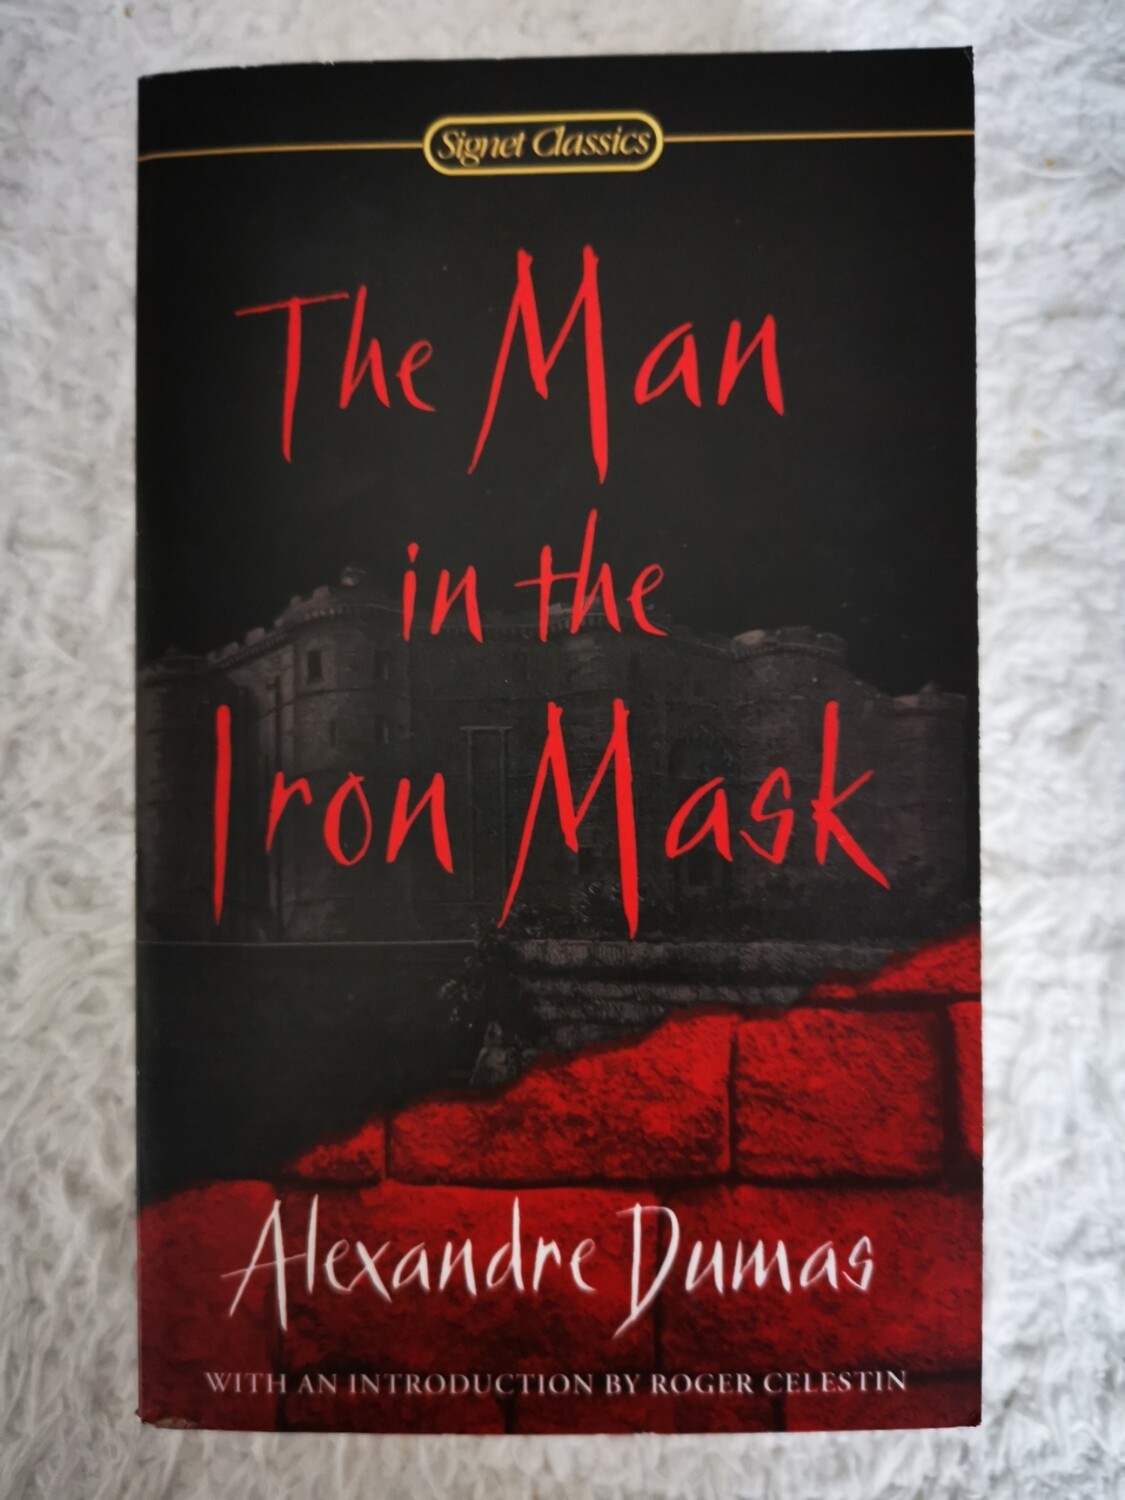 The man in the Iron mask, Alexandre Dumas